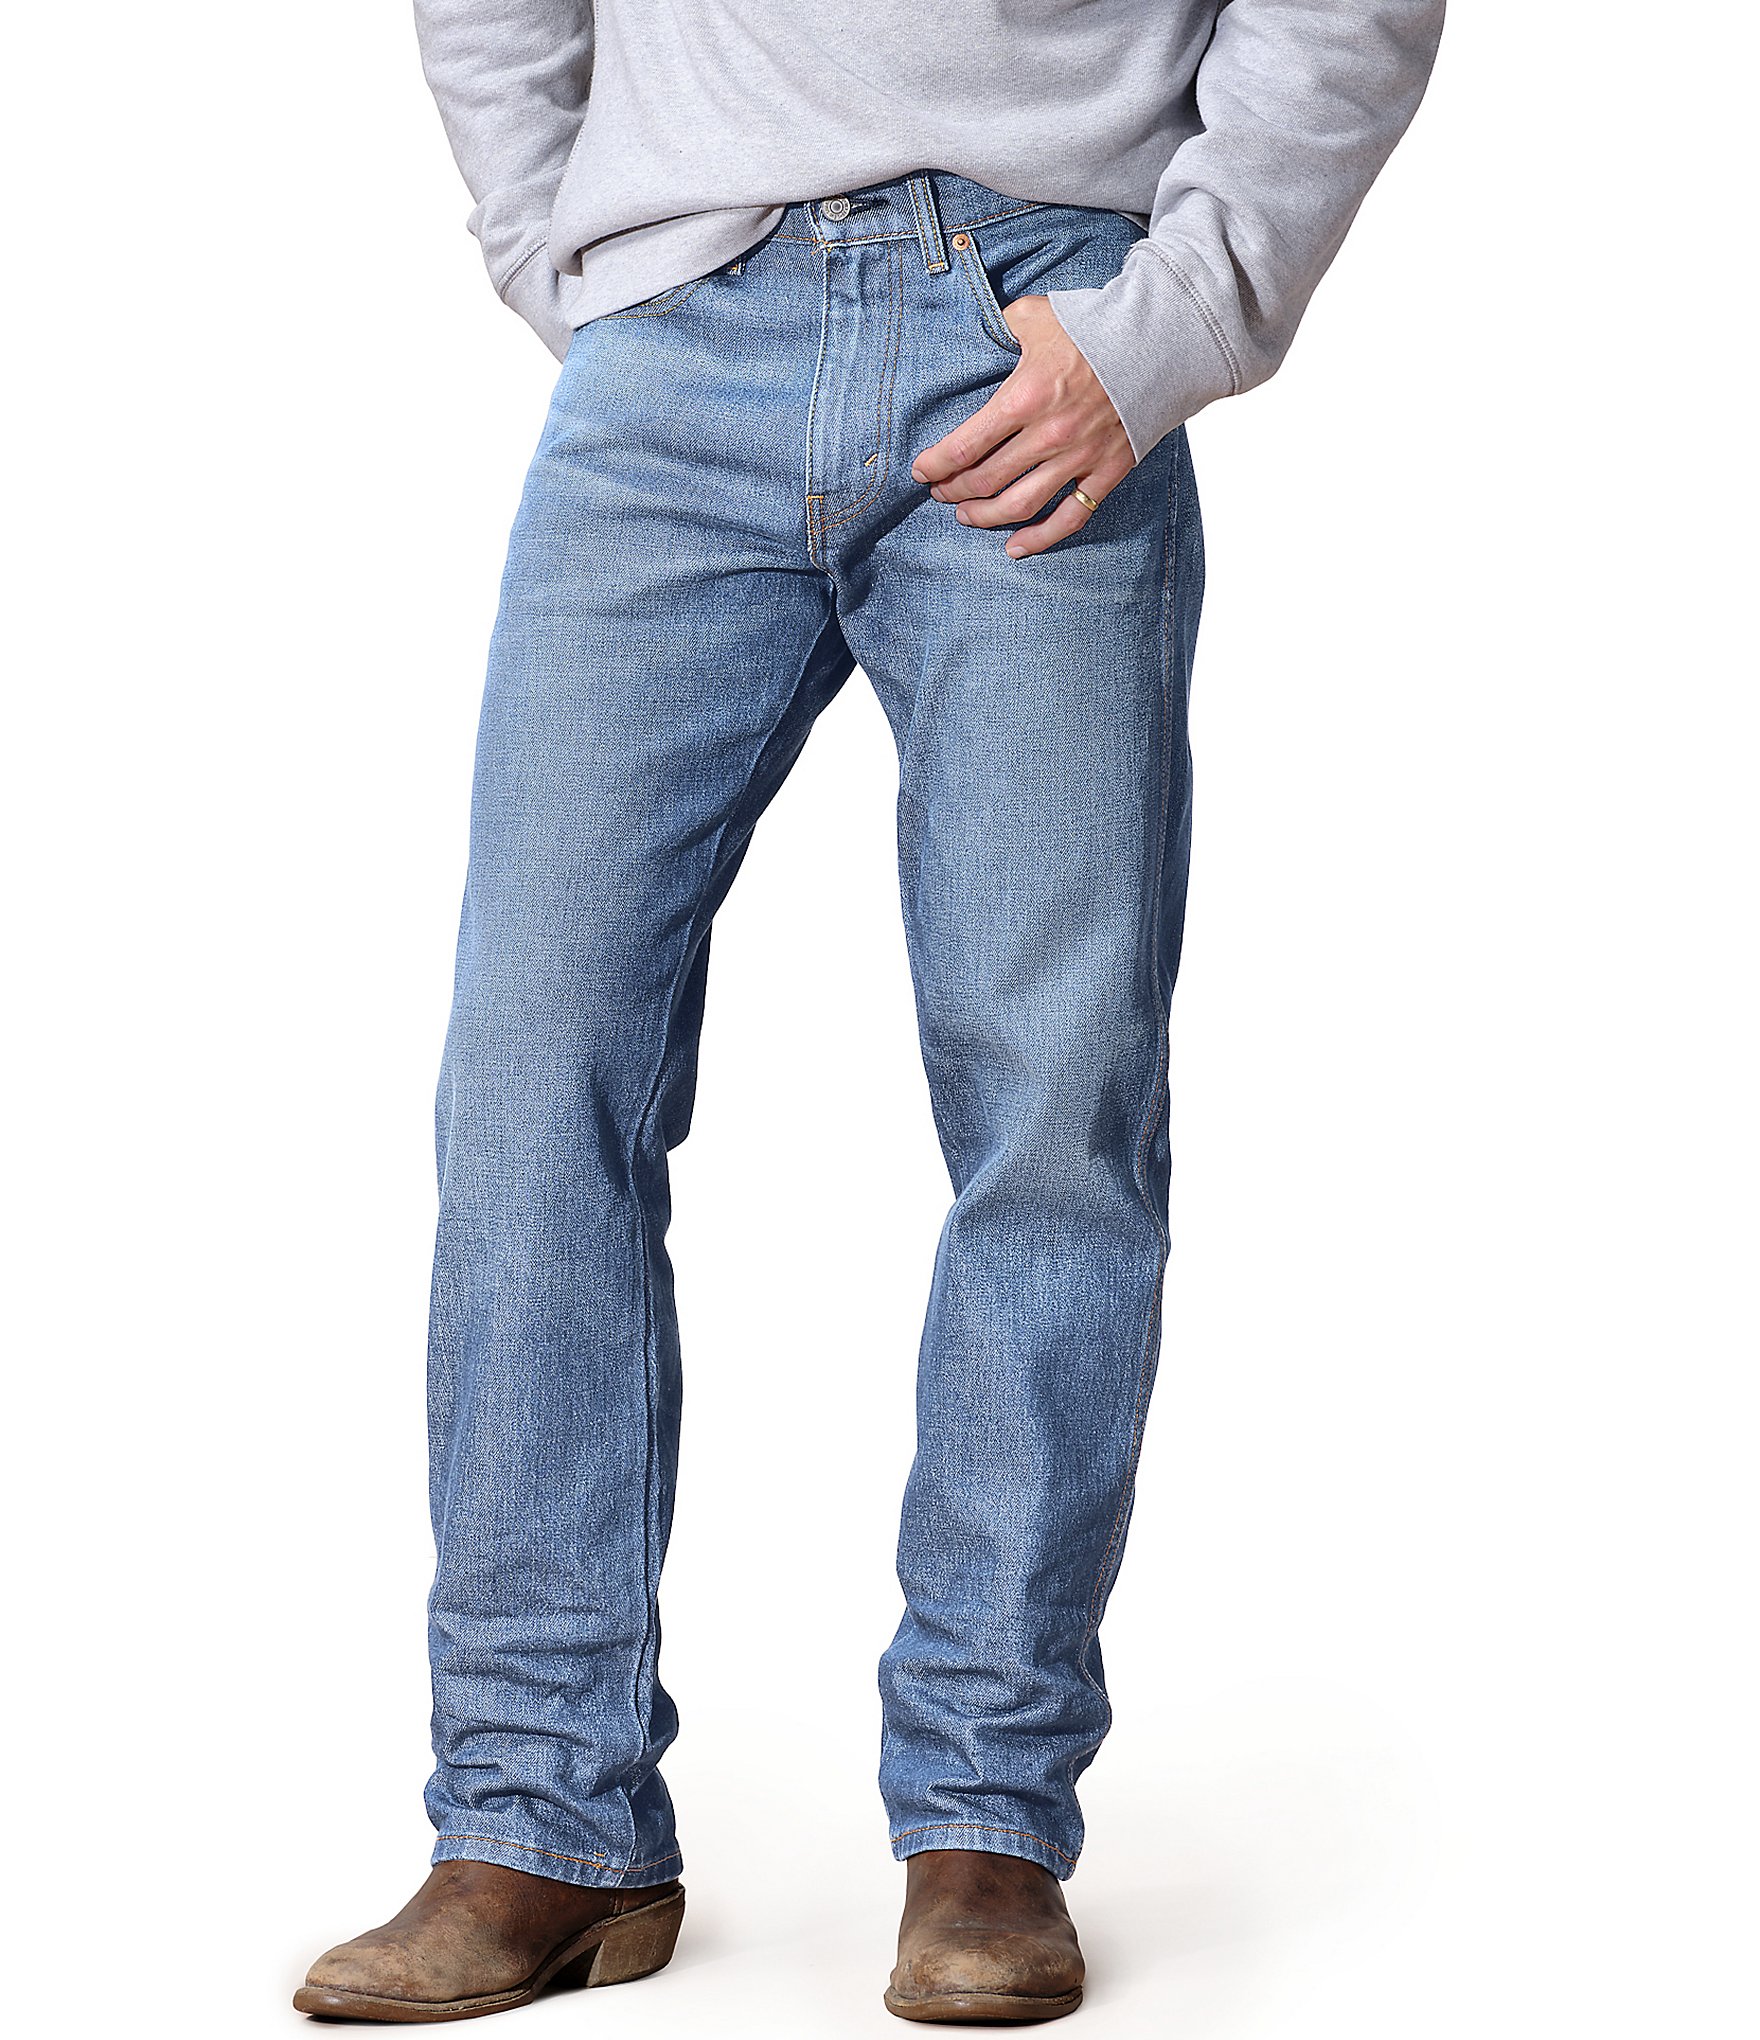 Bore accelerator hold Levi's® Western Fit Straight Leg Jeans | Dillard's